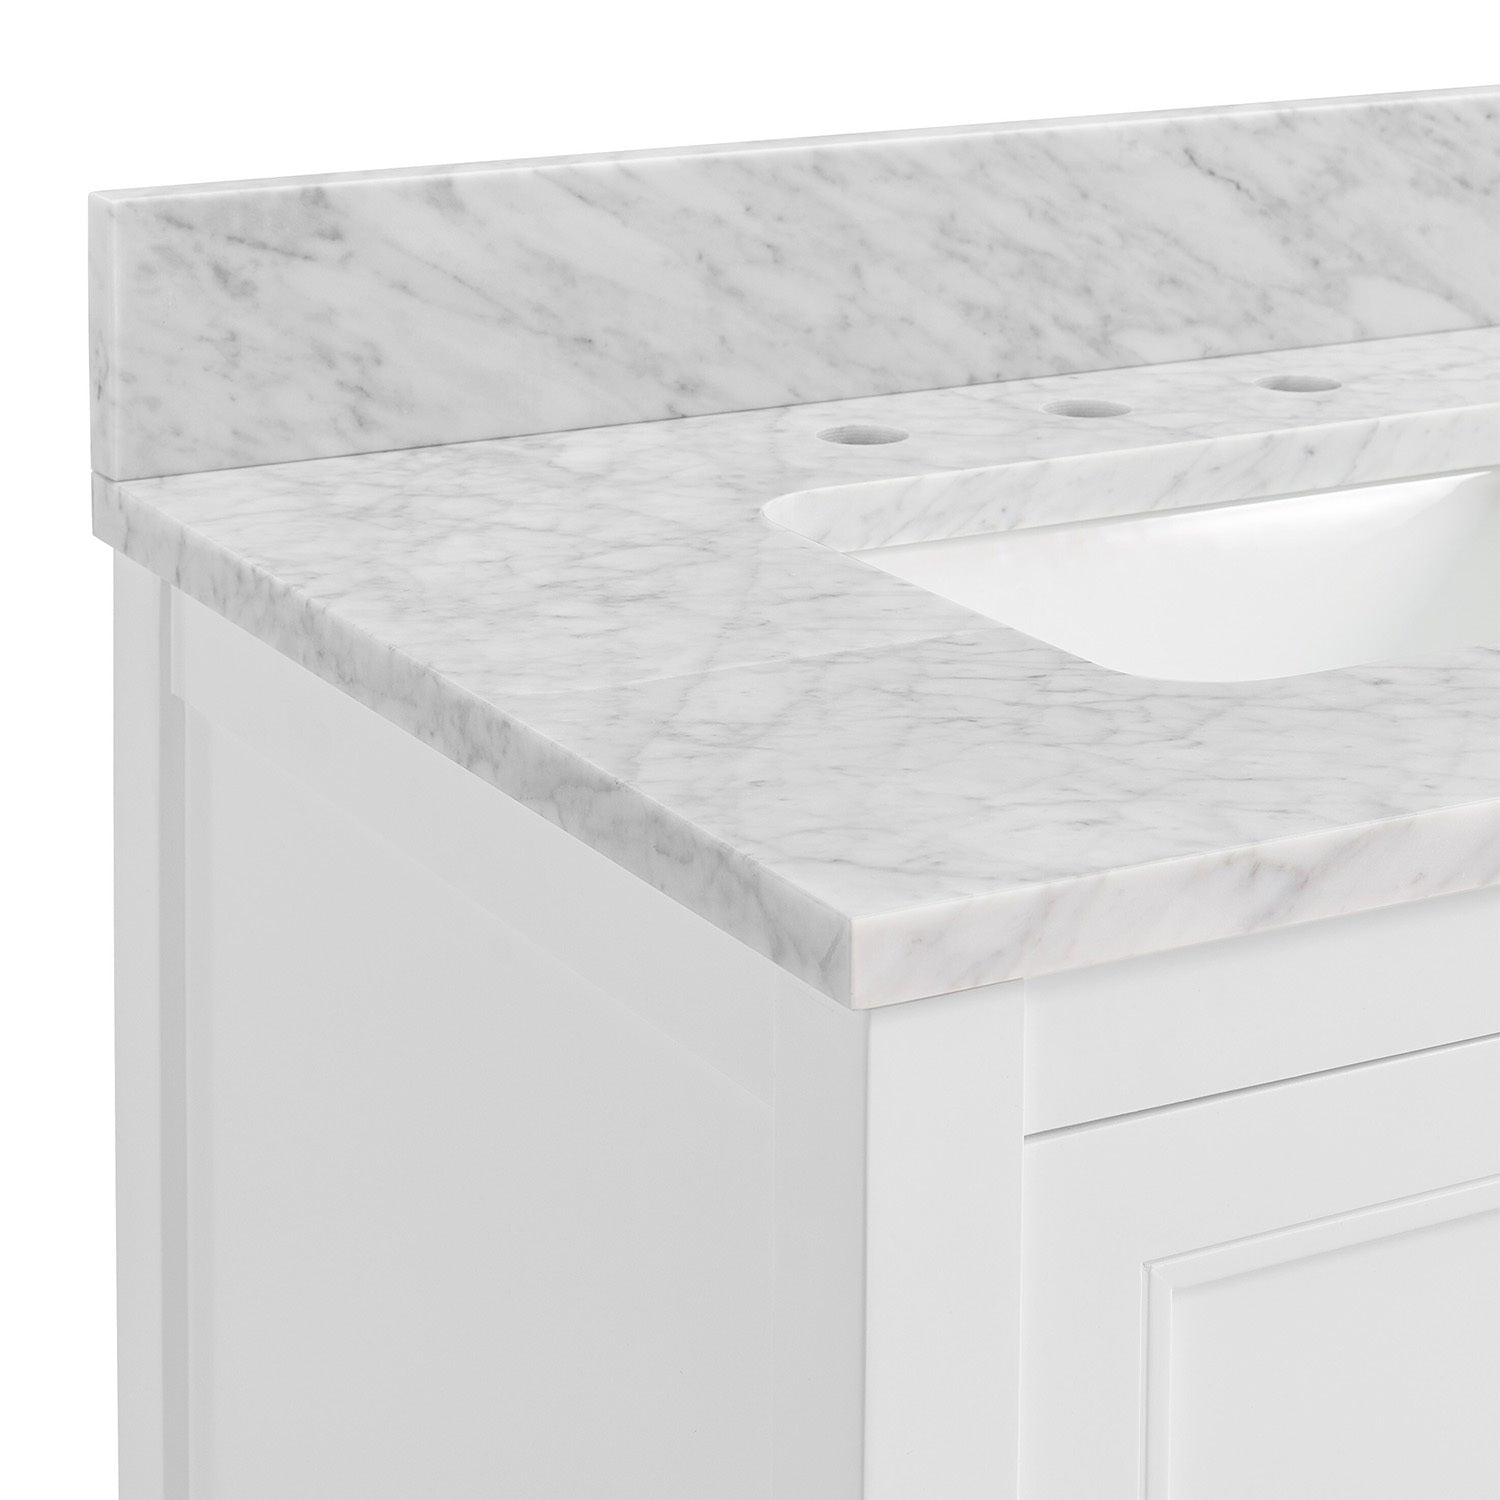 60 in Undermount Double Sinks Bathroom Storage Cabinet 4+-white-4+-soft close